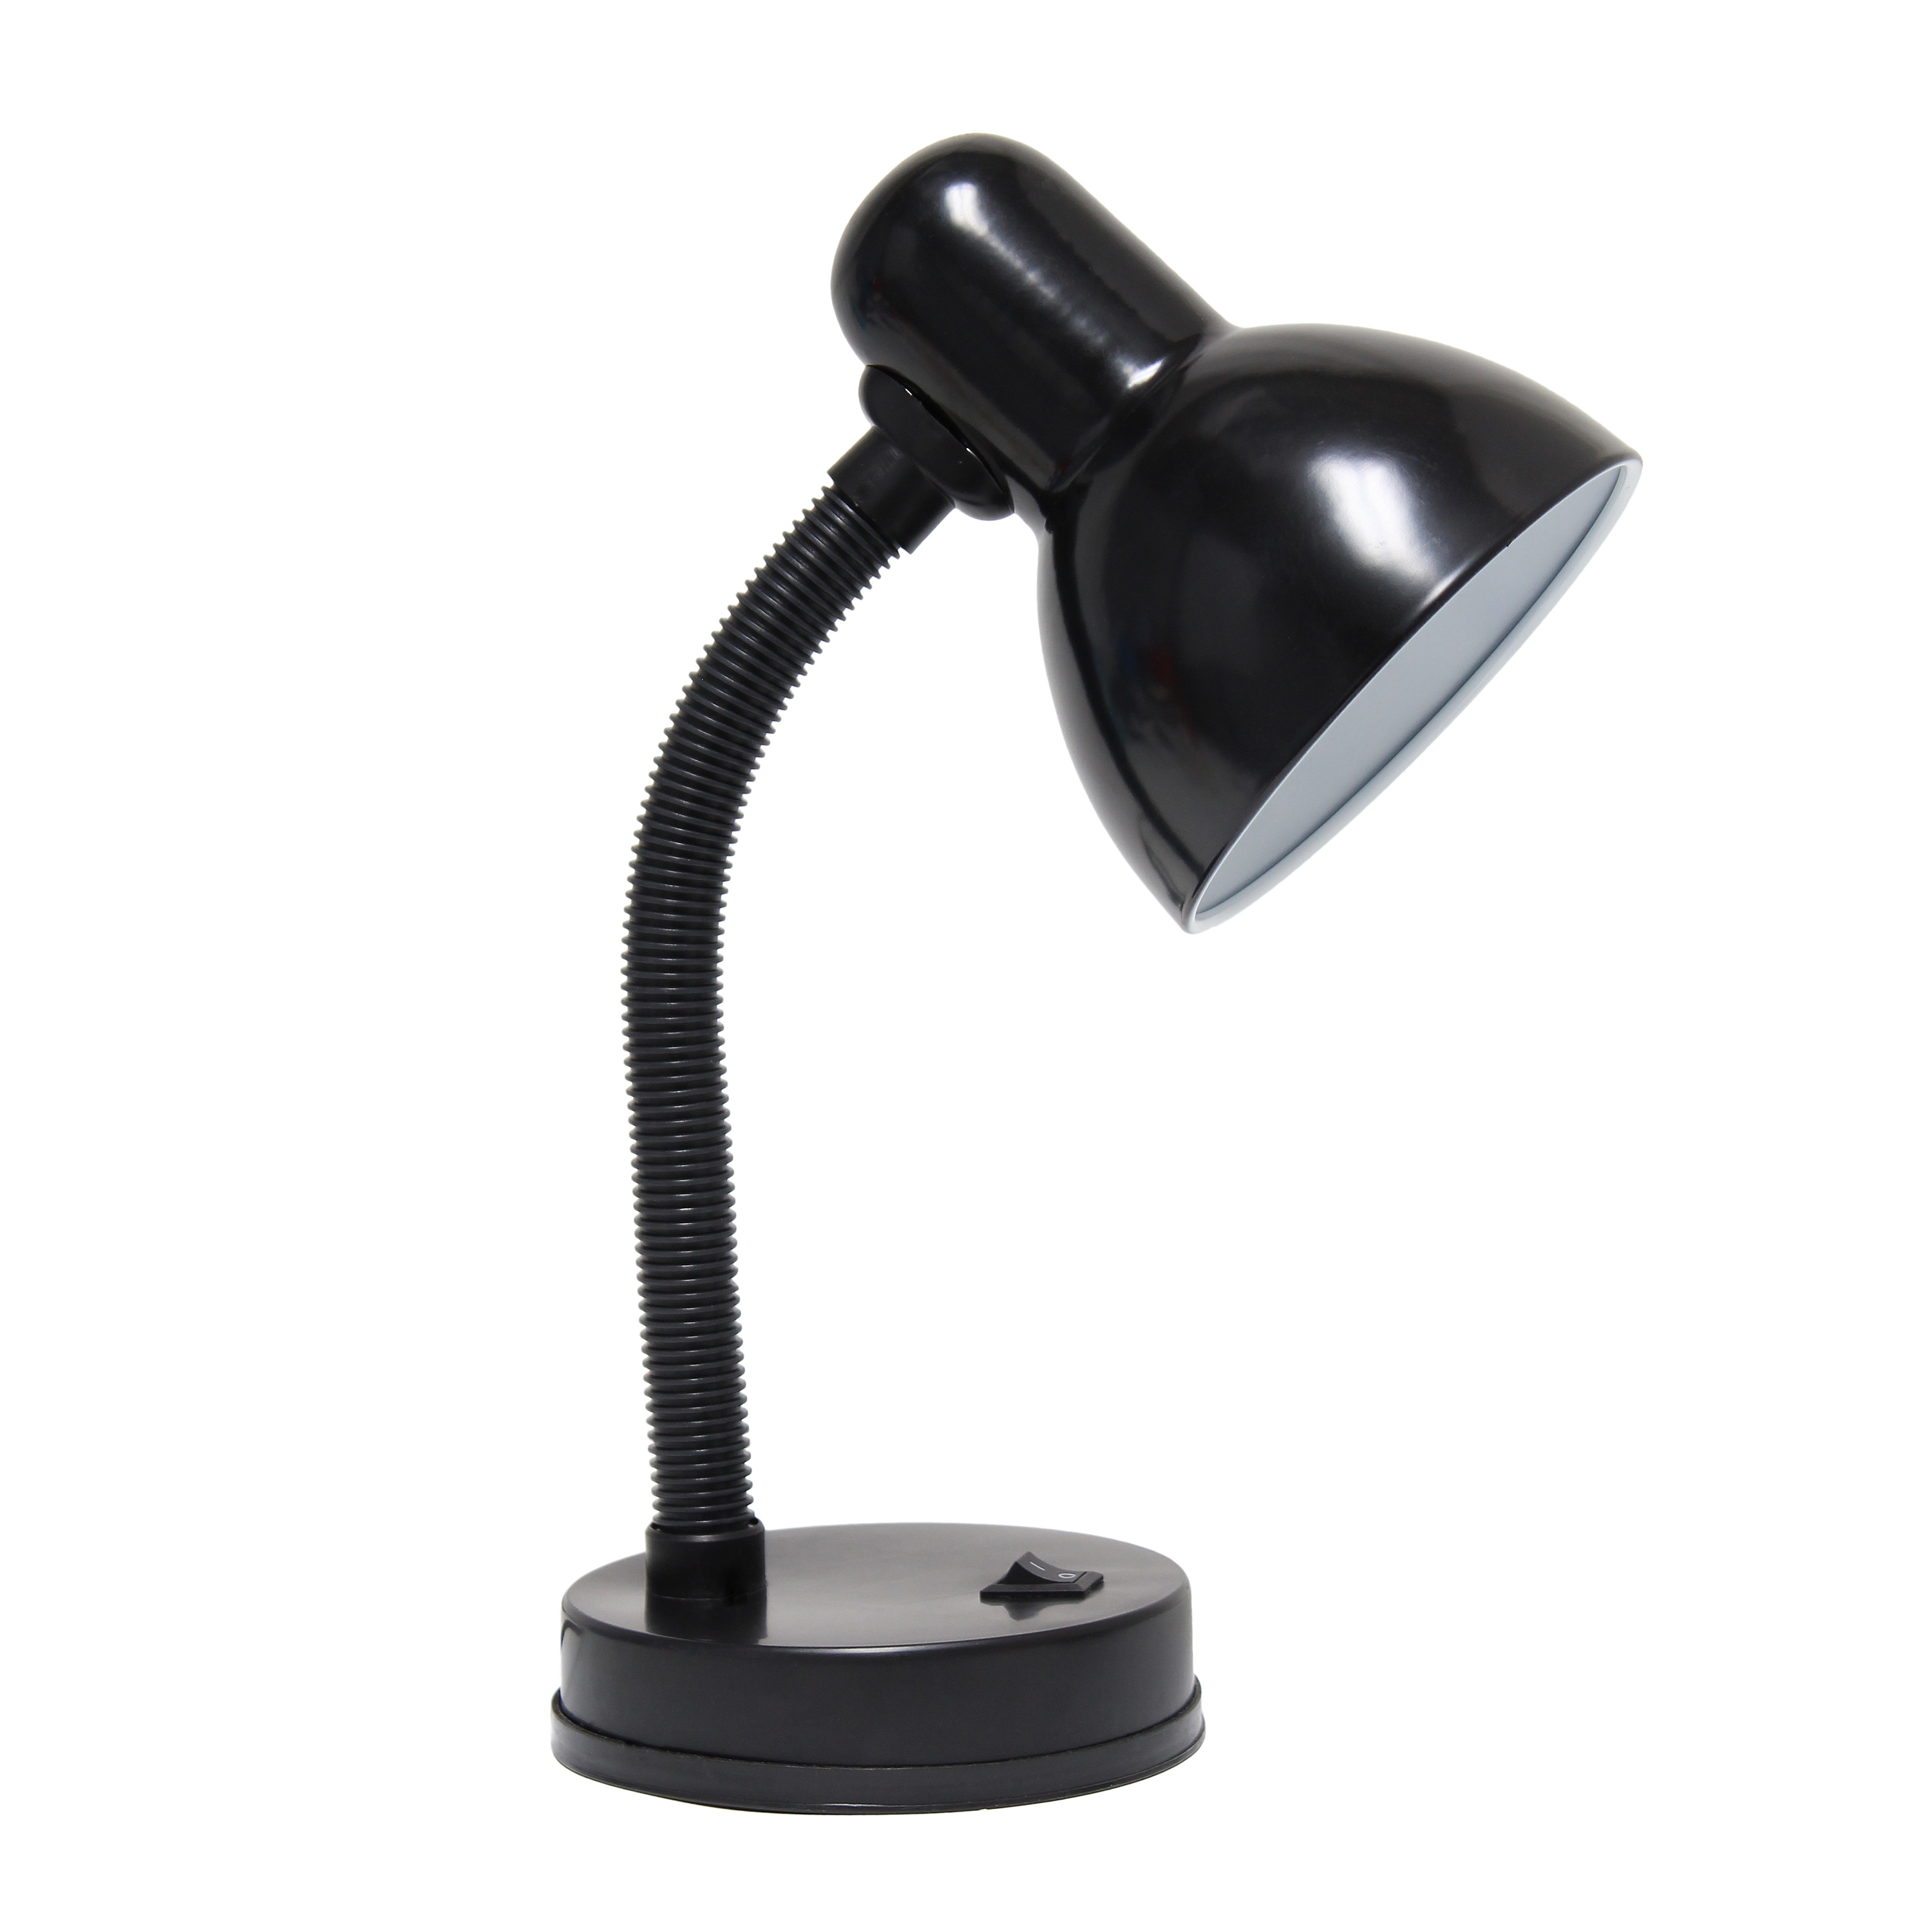 Simple Designs 14.25" Basic Metal Desk Lamp with Flexible Hose Neck, Black - image 1 of 13